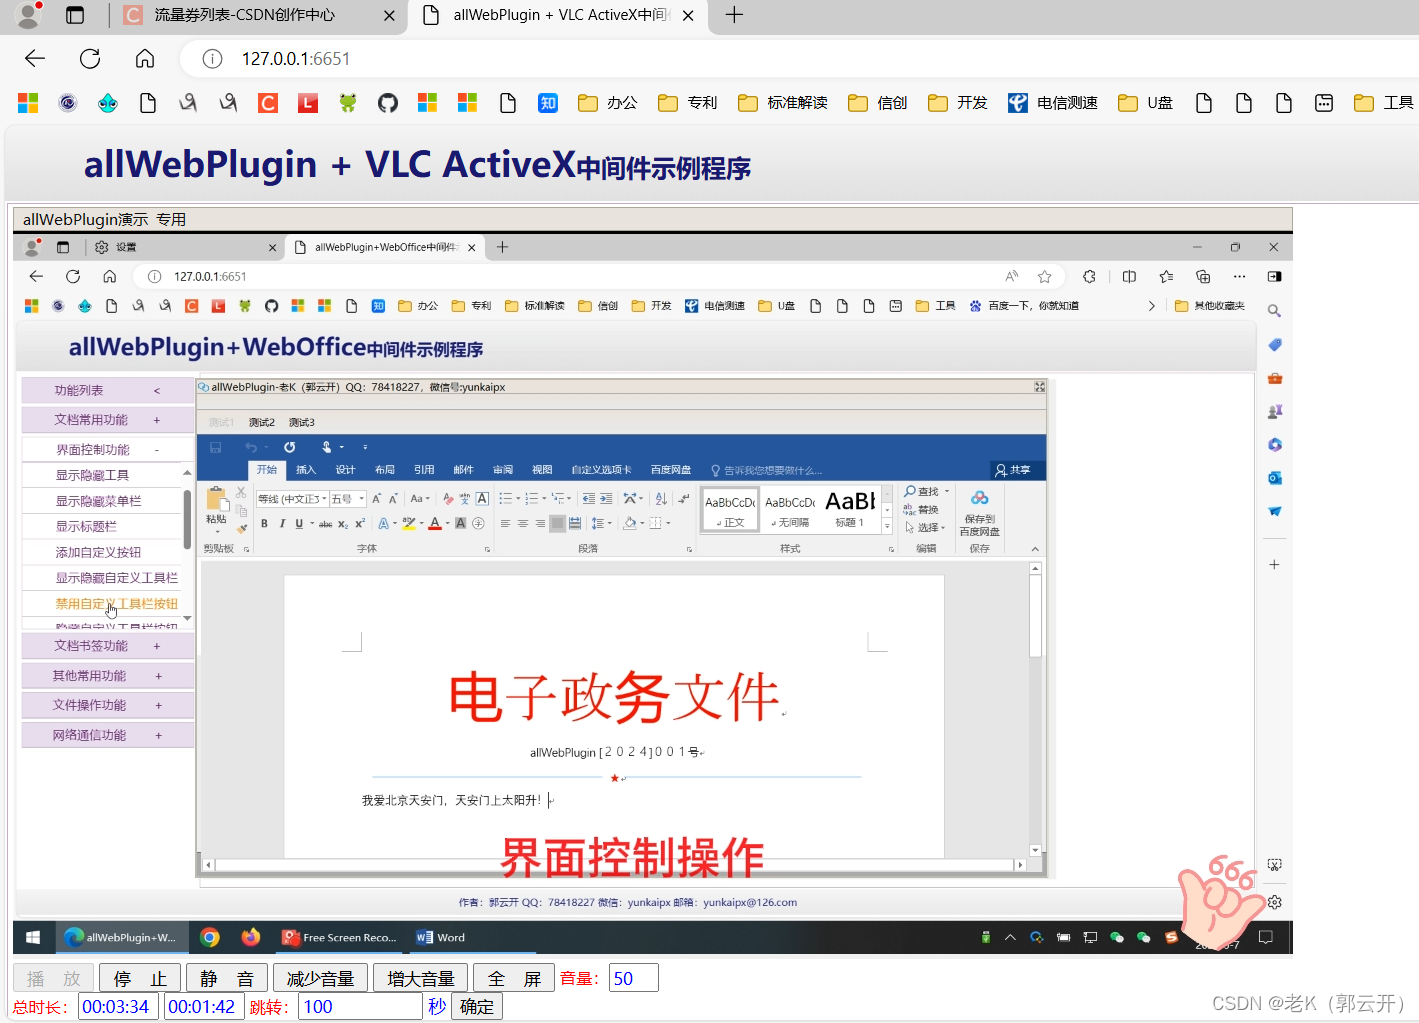 VLC ActiveX插件在Edge浏览器浏览器中的效果